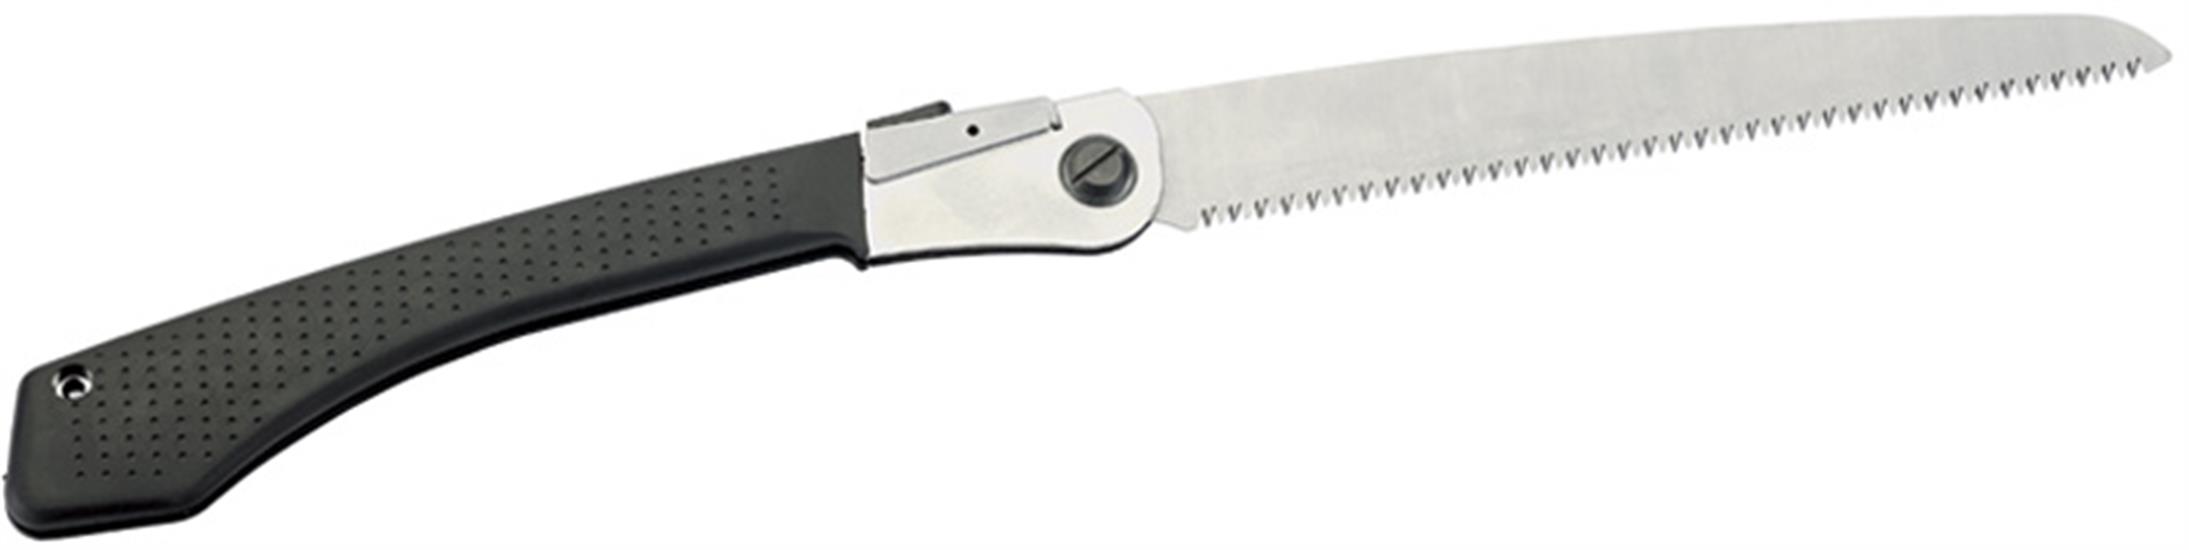 Draper 44994 �/EXP) - Folding Pruning Saw 𨉰mm)